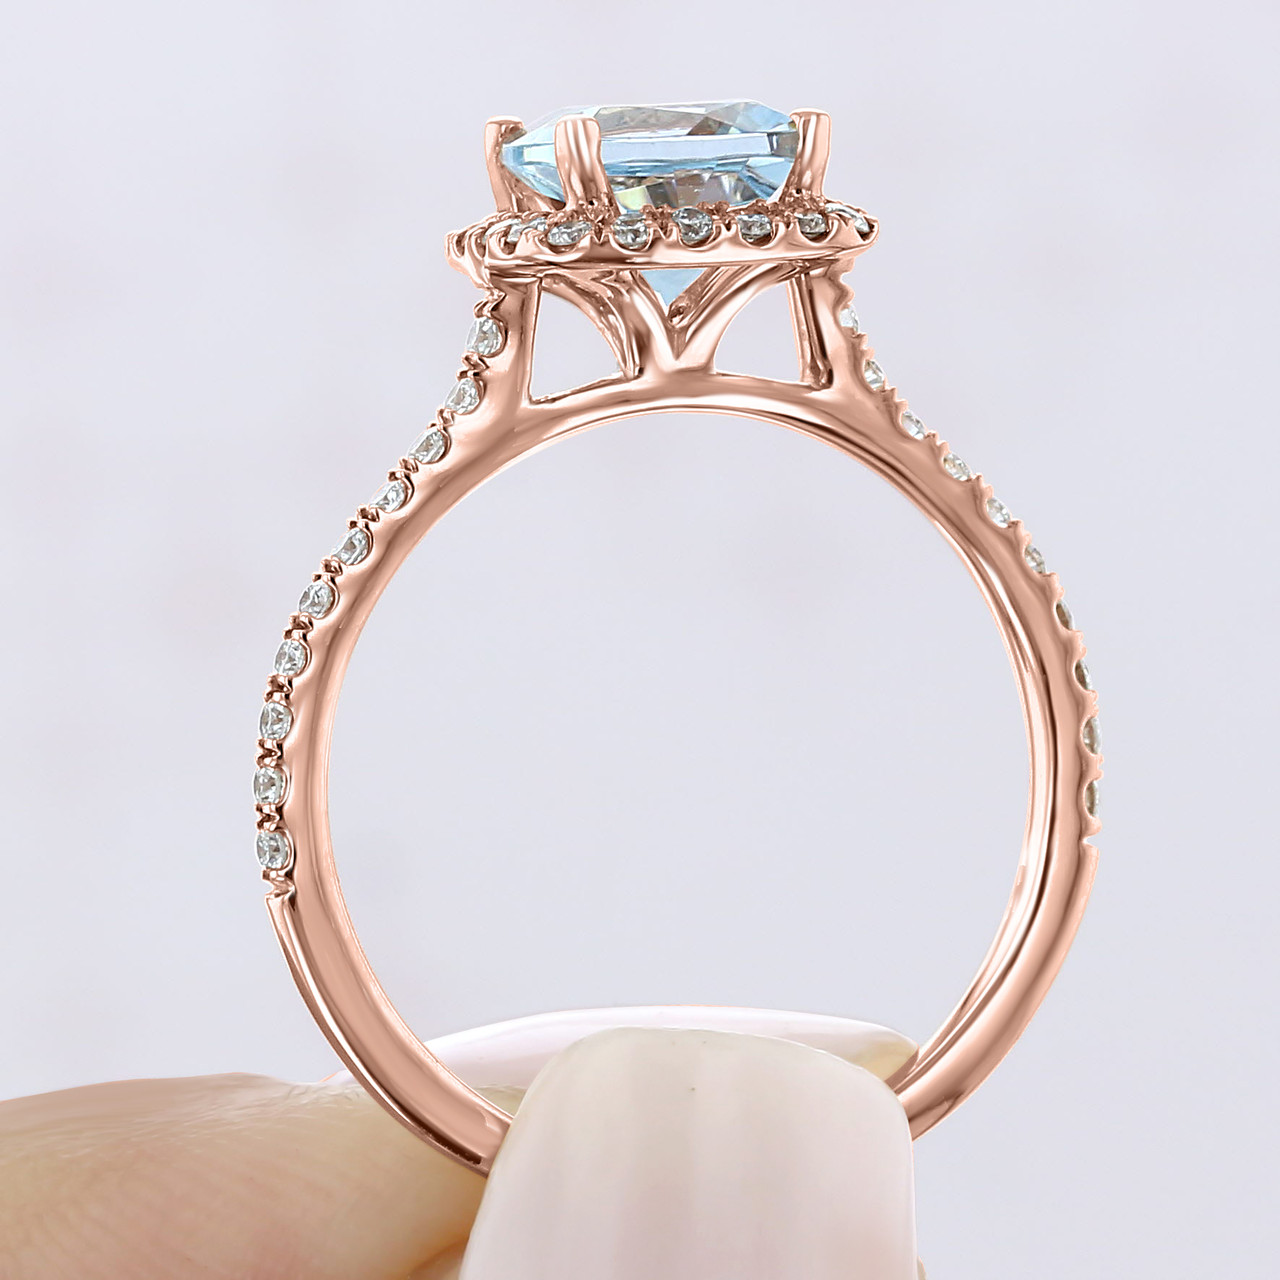 2Ct Oval Cut Aquamarine Diamond Pretty Halo Engagement Ring 14K Rose Gold Finish 